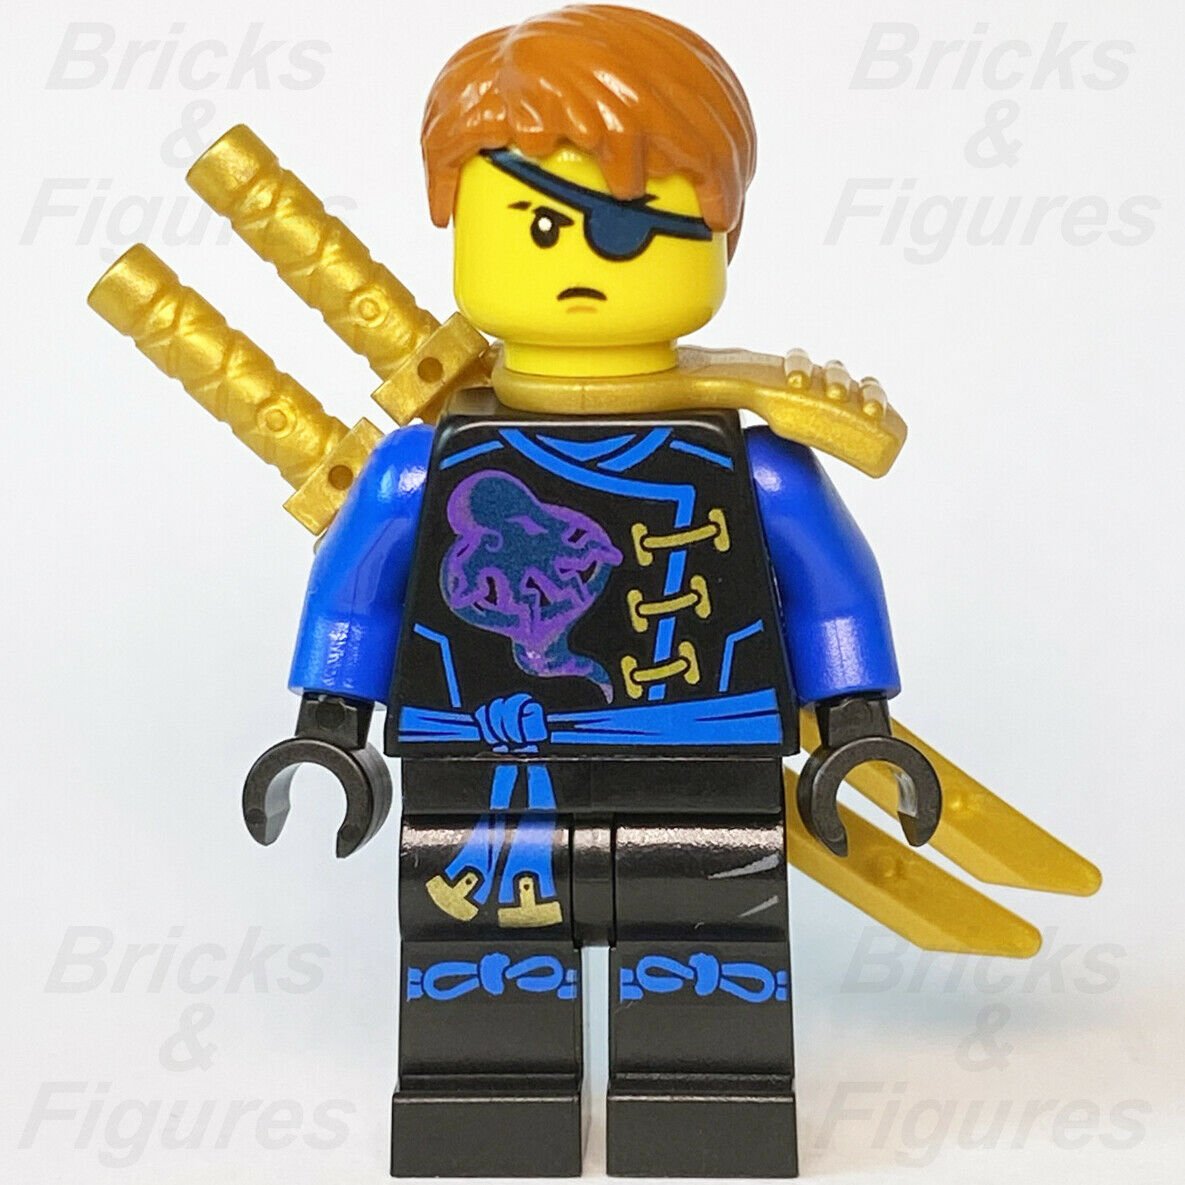 New Genuine Ninjago LEGO Jay Pirate Ninja Skybound Minifigure from set 70605 - Bricks & Figures